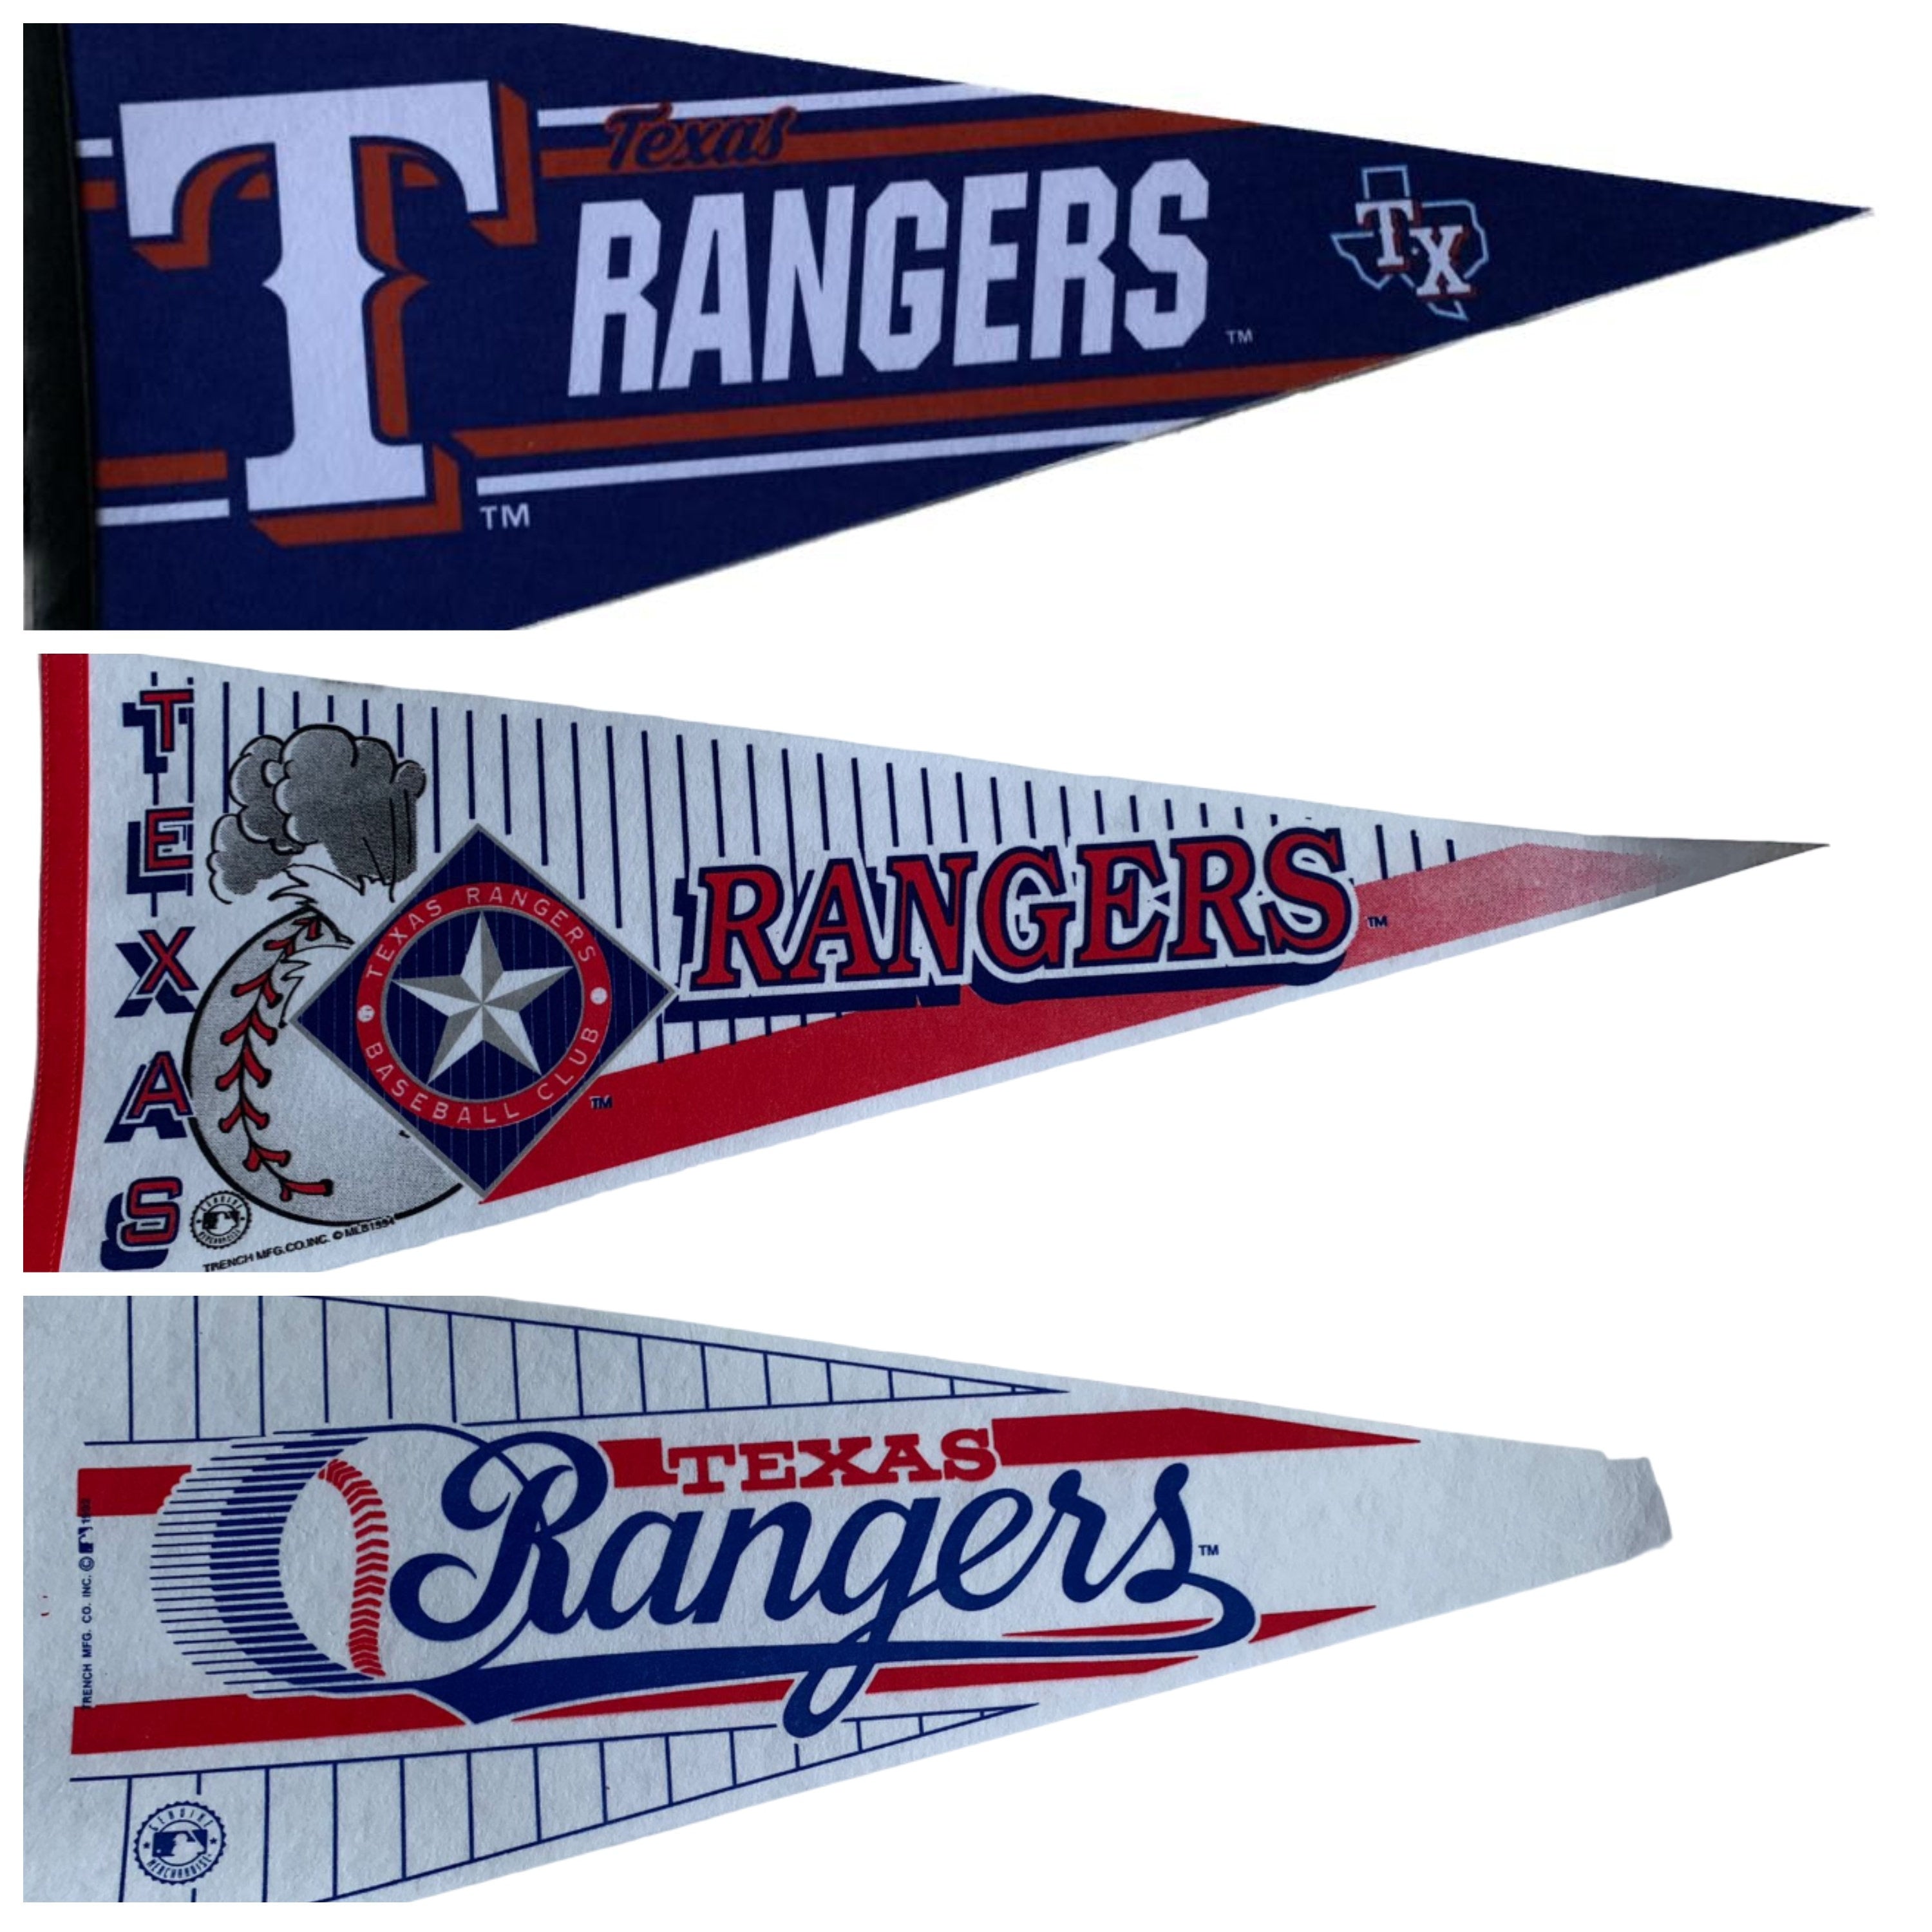 Texas Rangers MLB vintage 90s old logo mlb pennants vaantje baseball fanion pennant flag vintage classic rangers old 90s logo rare new tx - Ball design